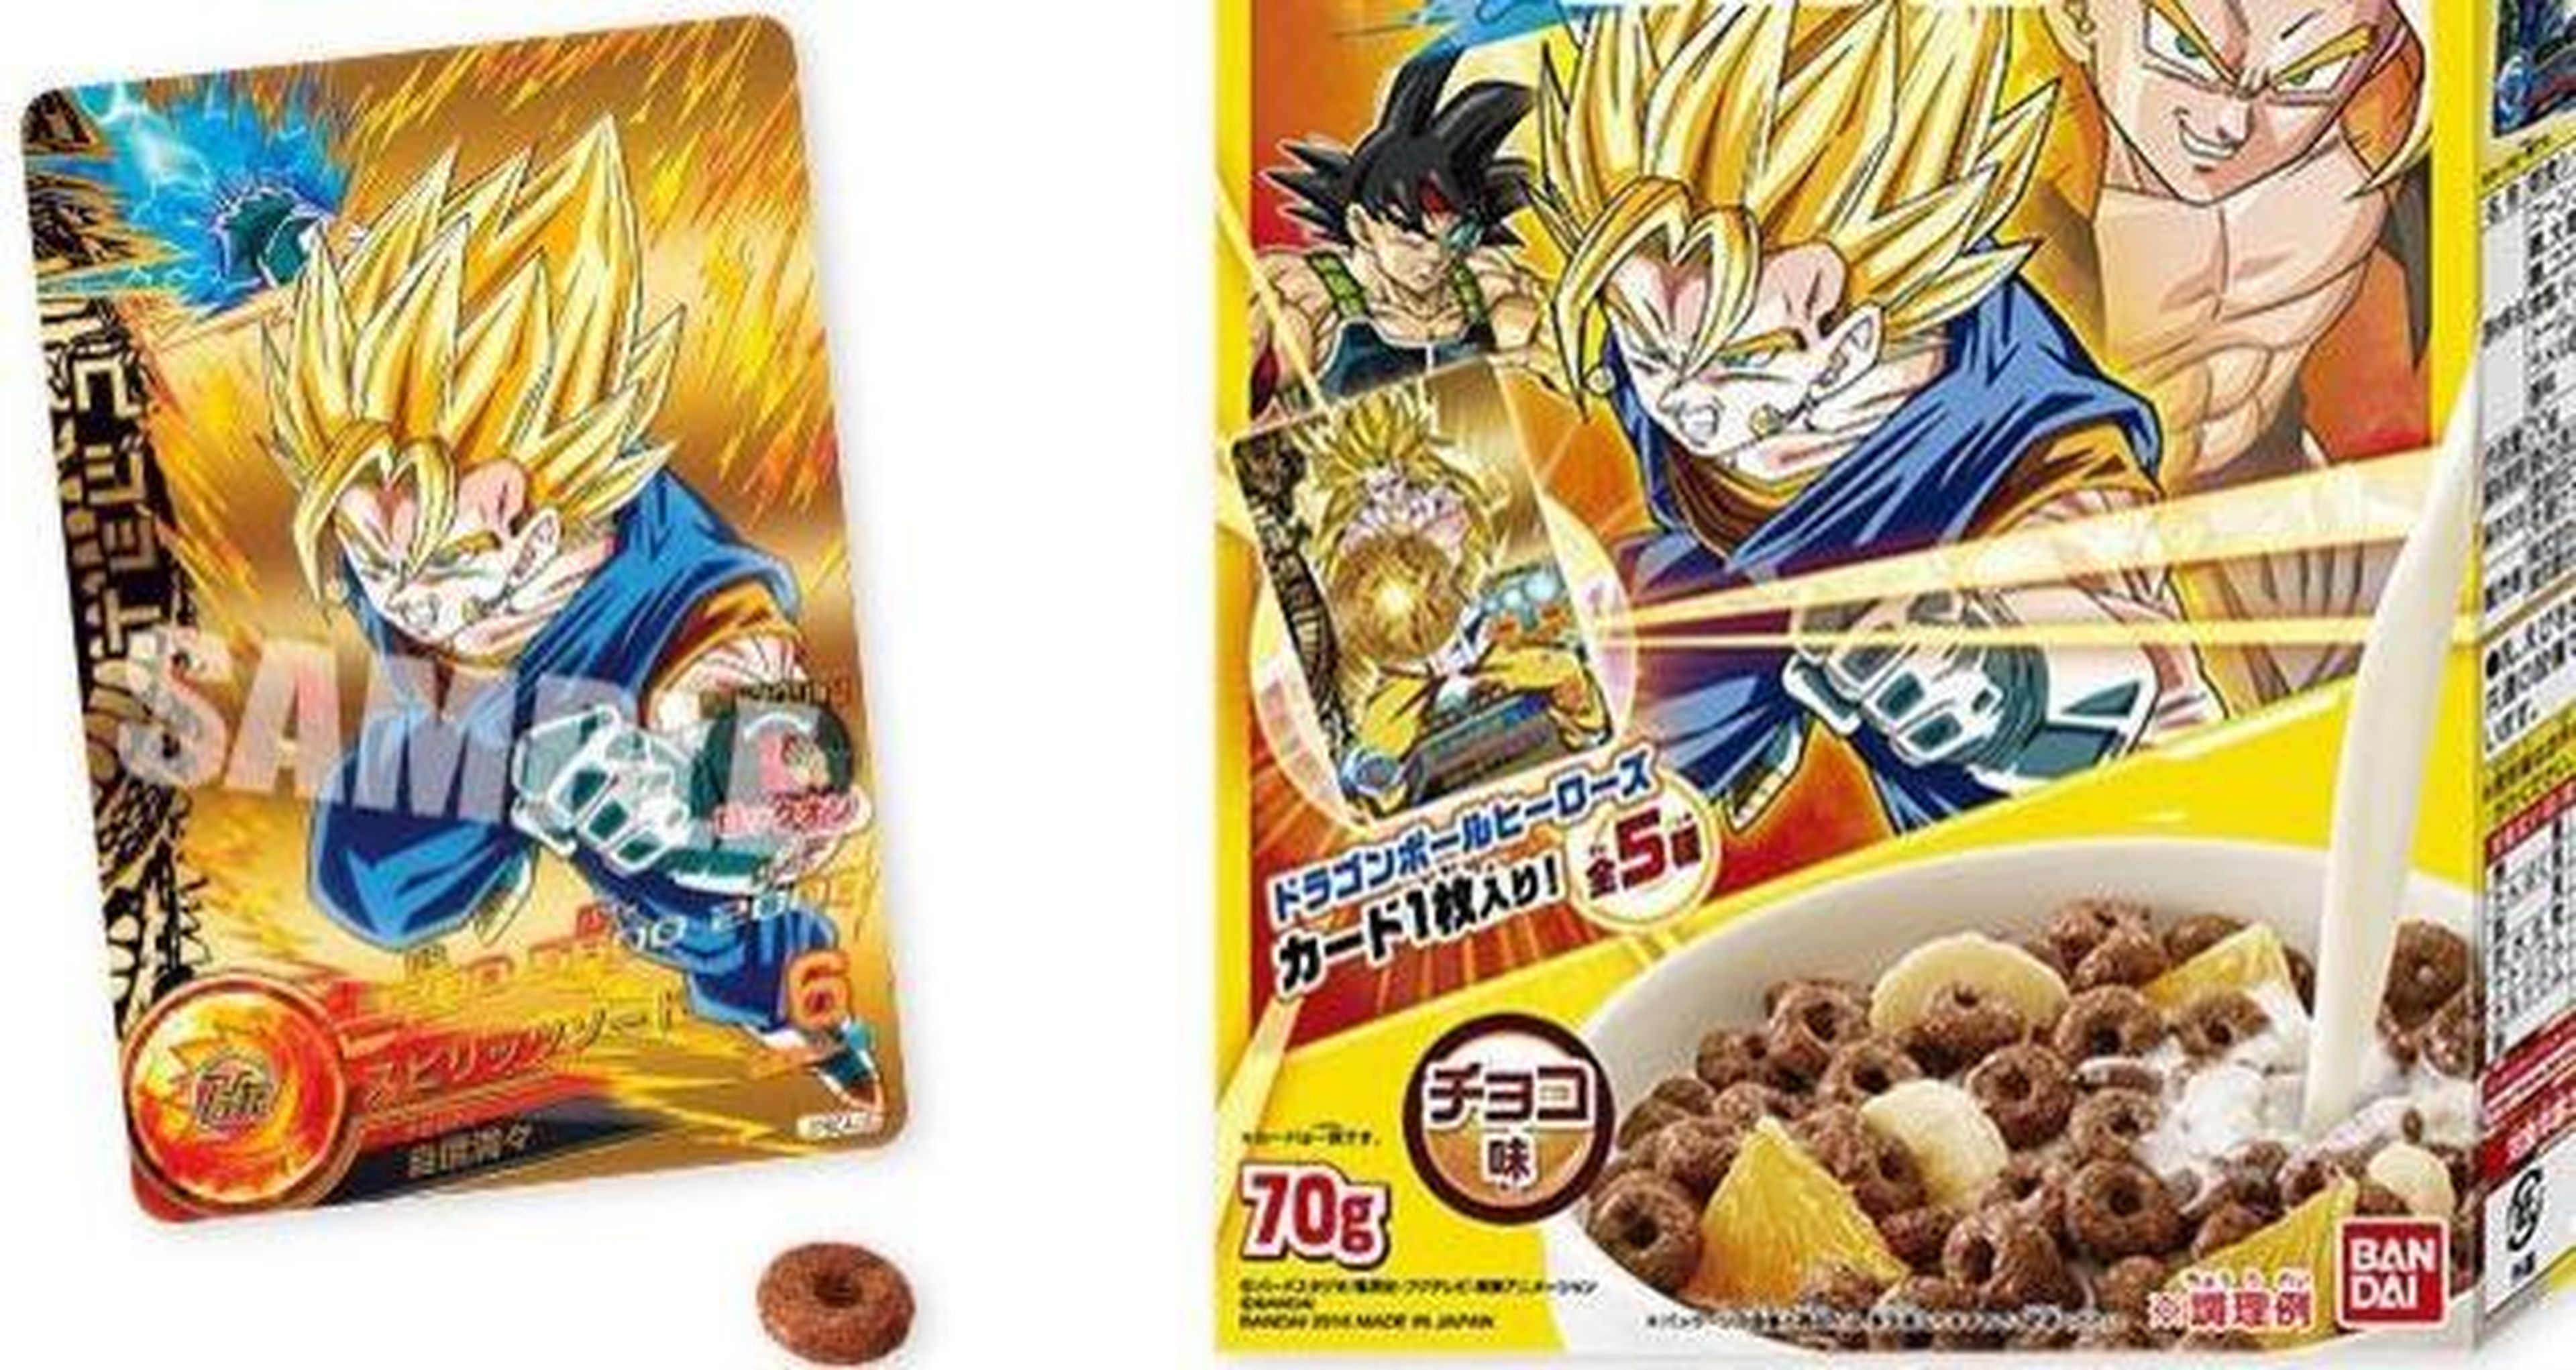 Dragon Ball - Bandai lanza los cereales